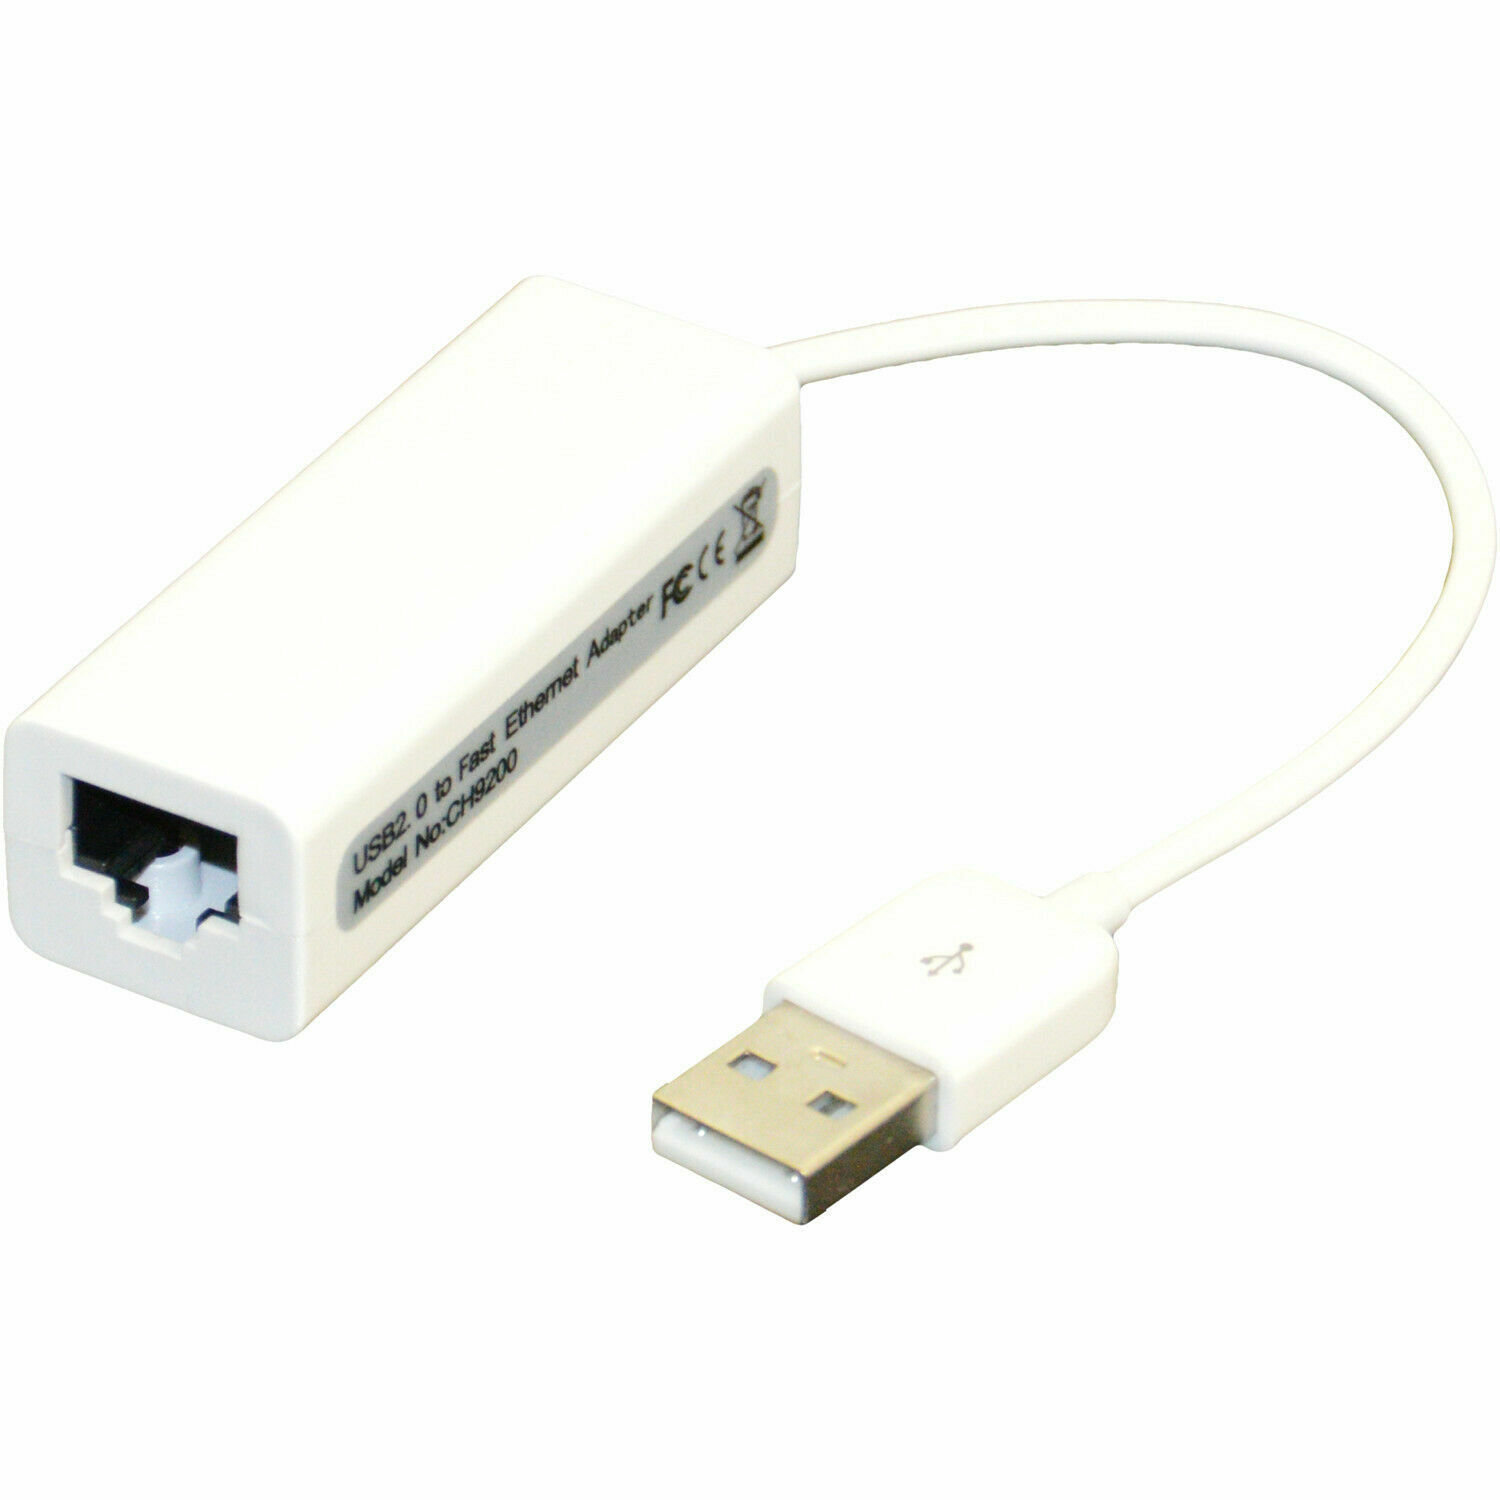 USB 2.0 to Ethernet RJ45 Network LAN Adapter for Windows 7/8/10/Vista/XP